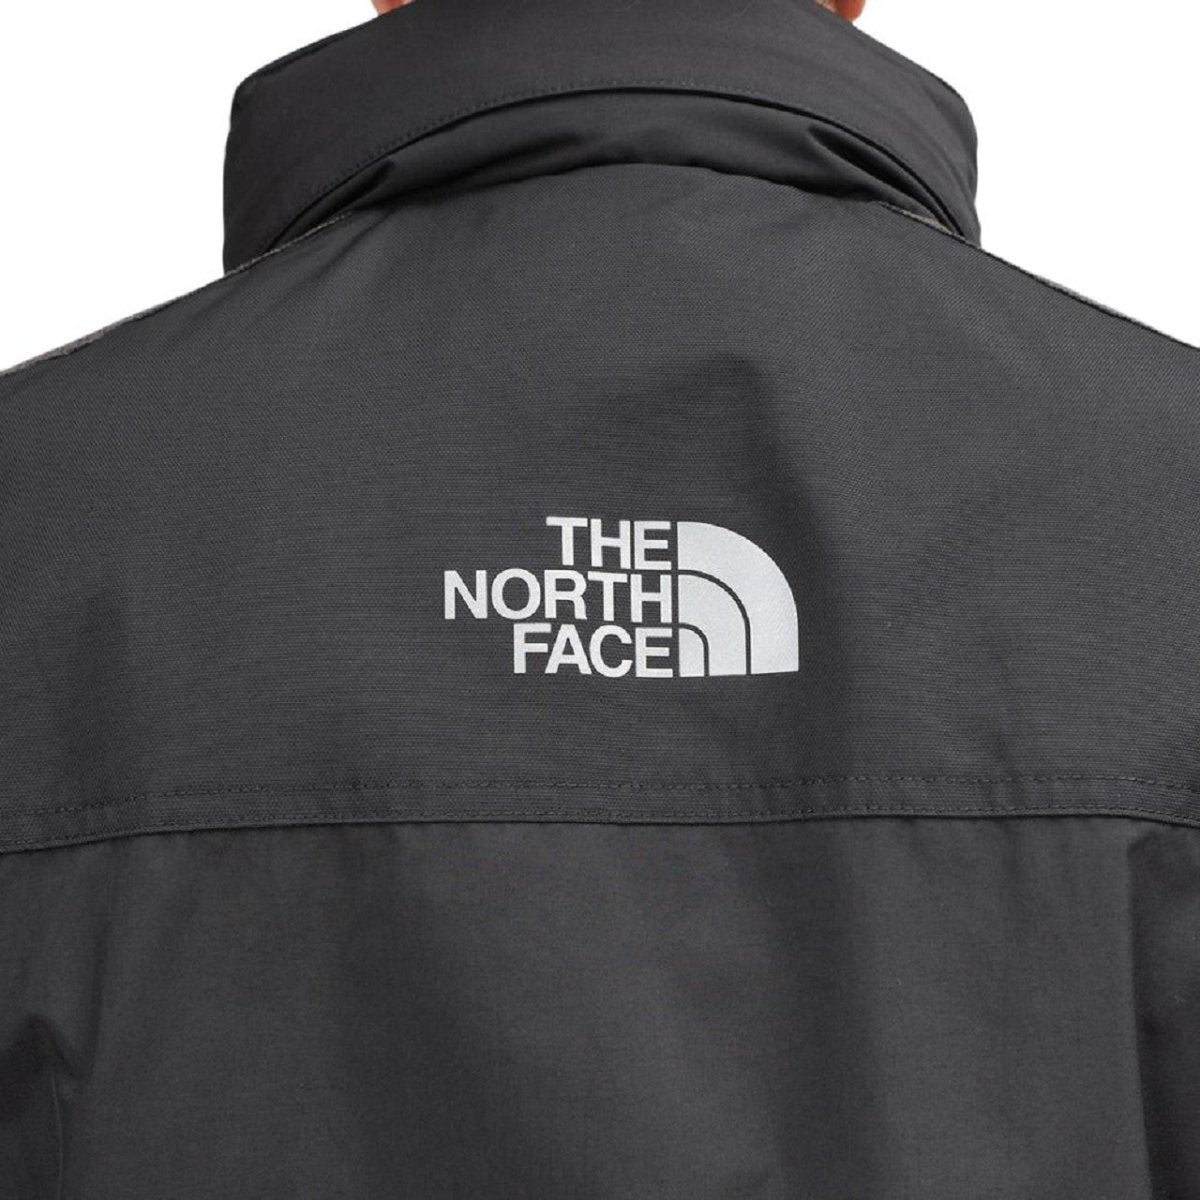 The North Face Steep Tech Apogee Jacket - Nf0a4qysjk31